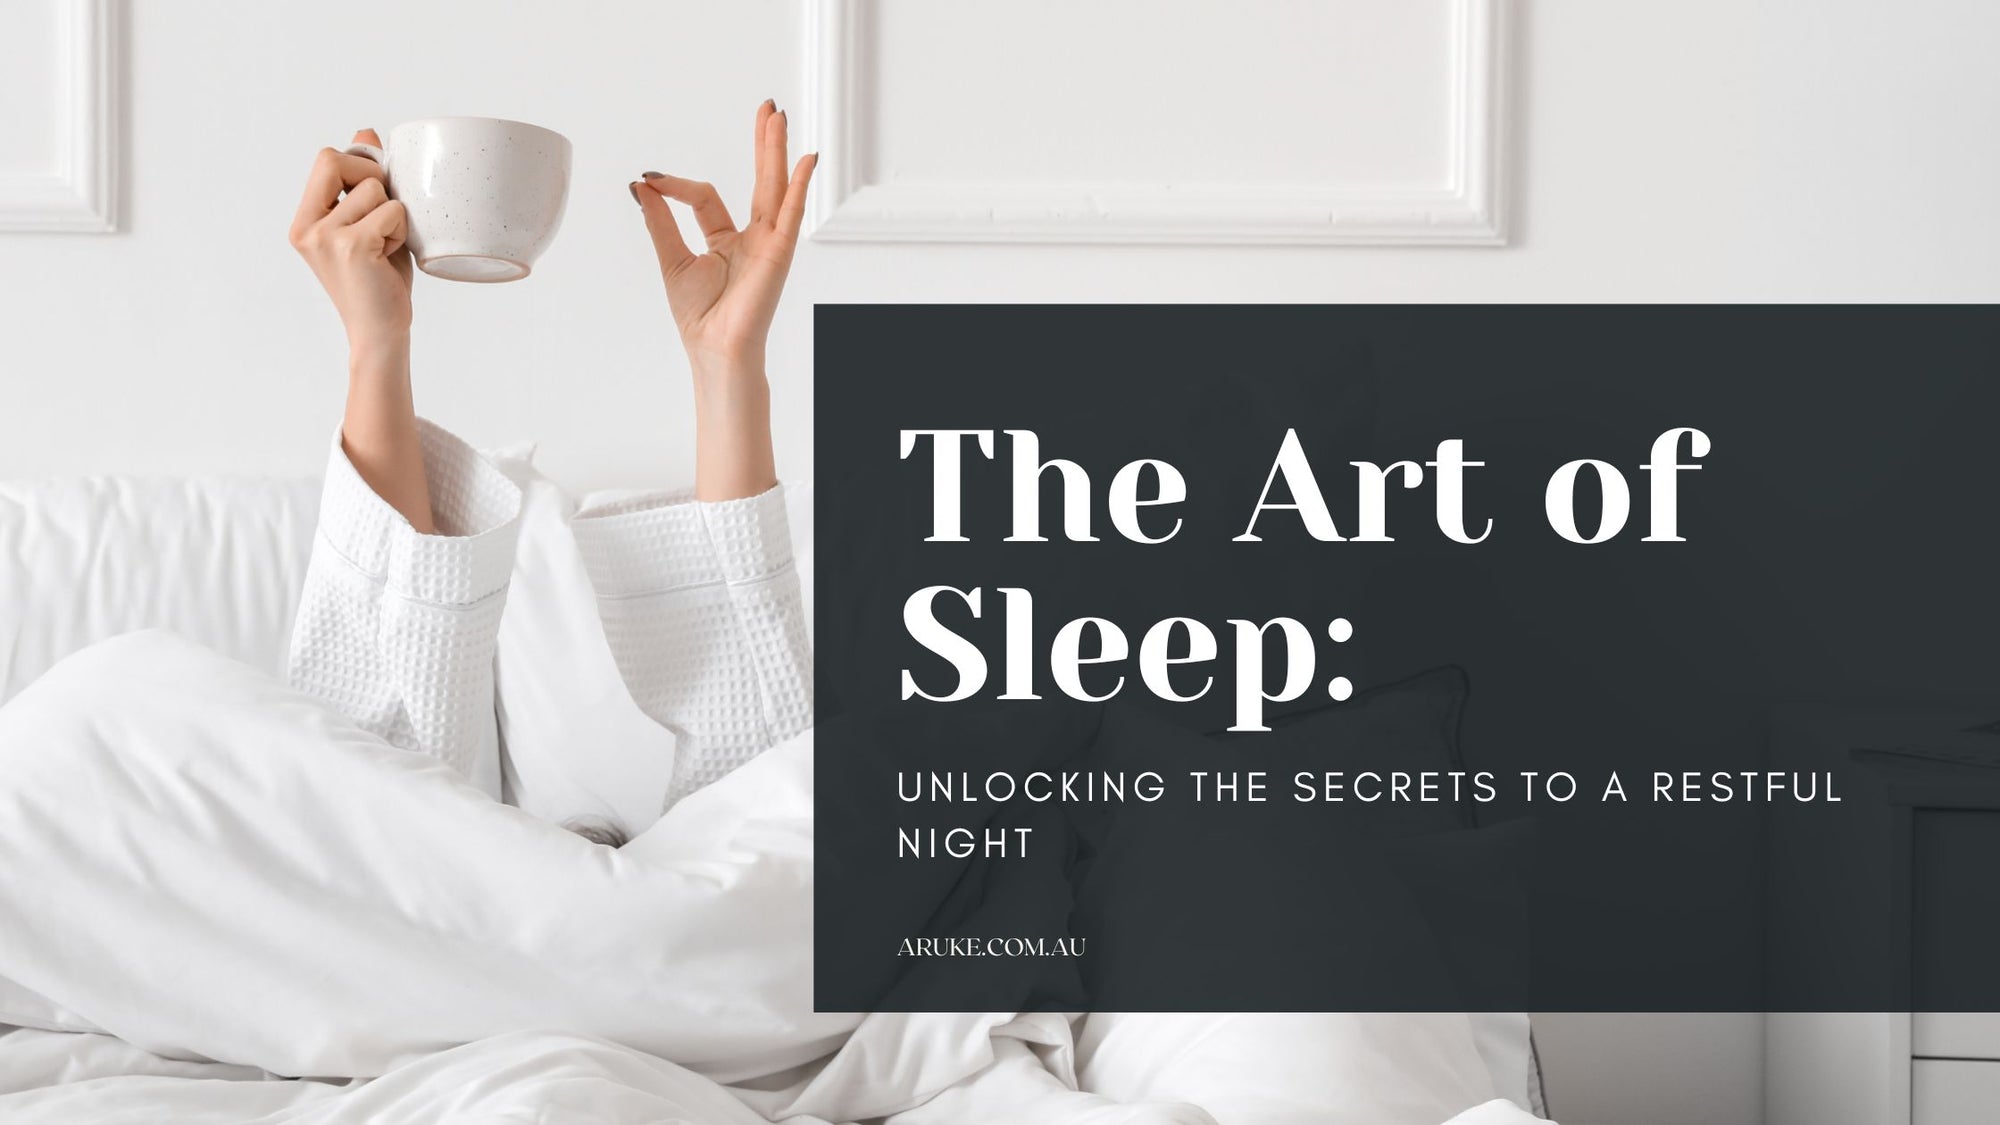 The Art Of Sleep: Unlocking the Secrets to a Restful Night